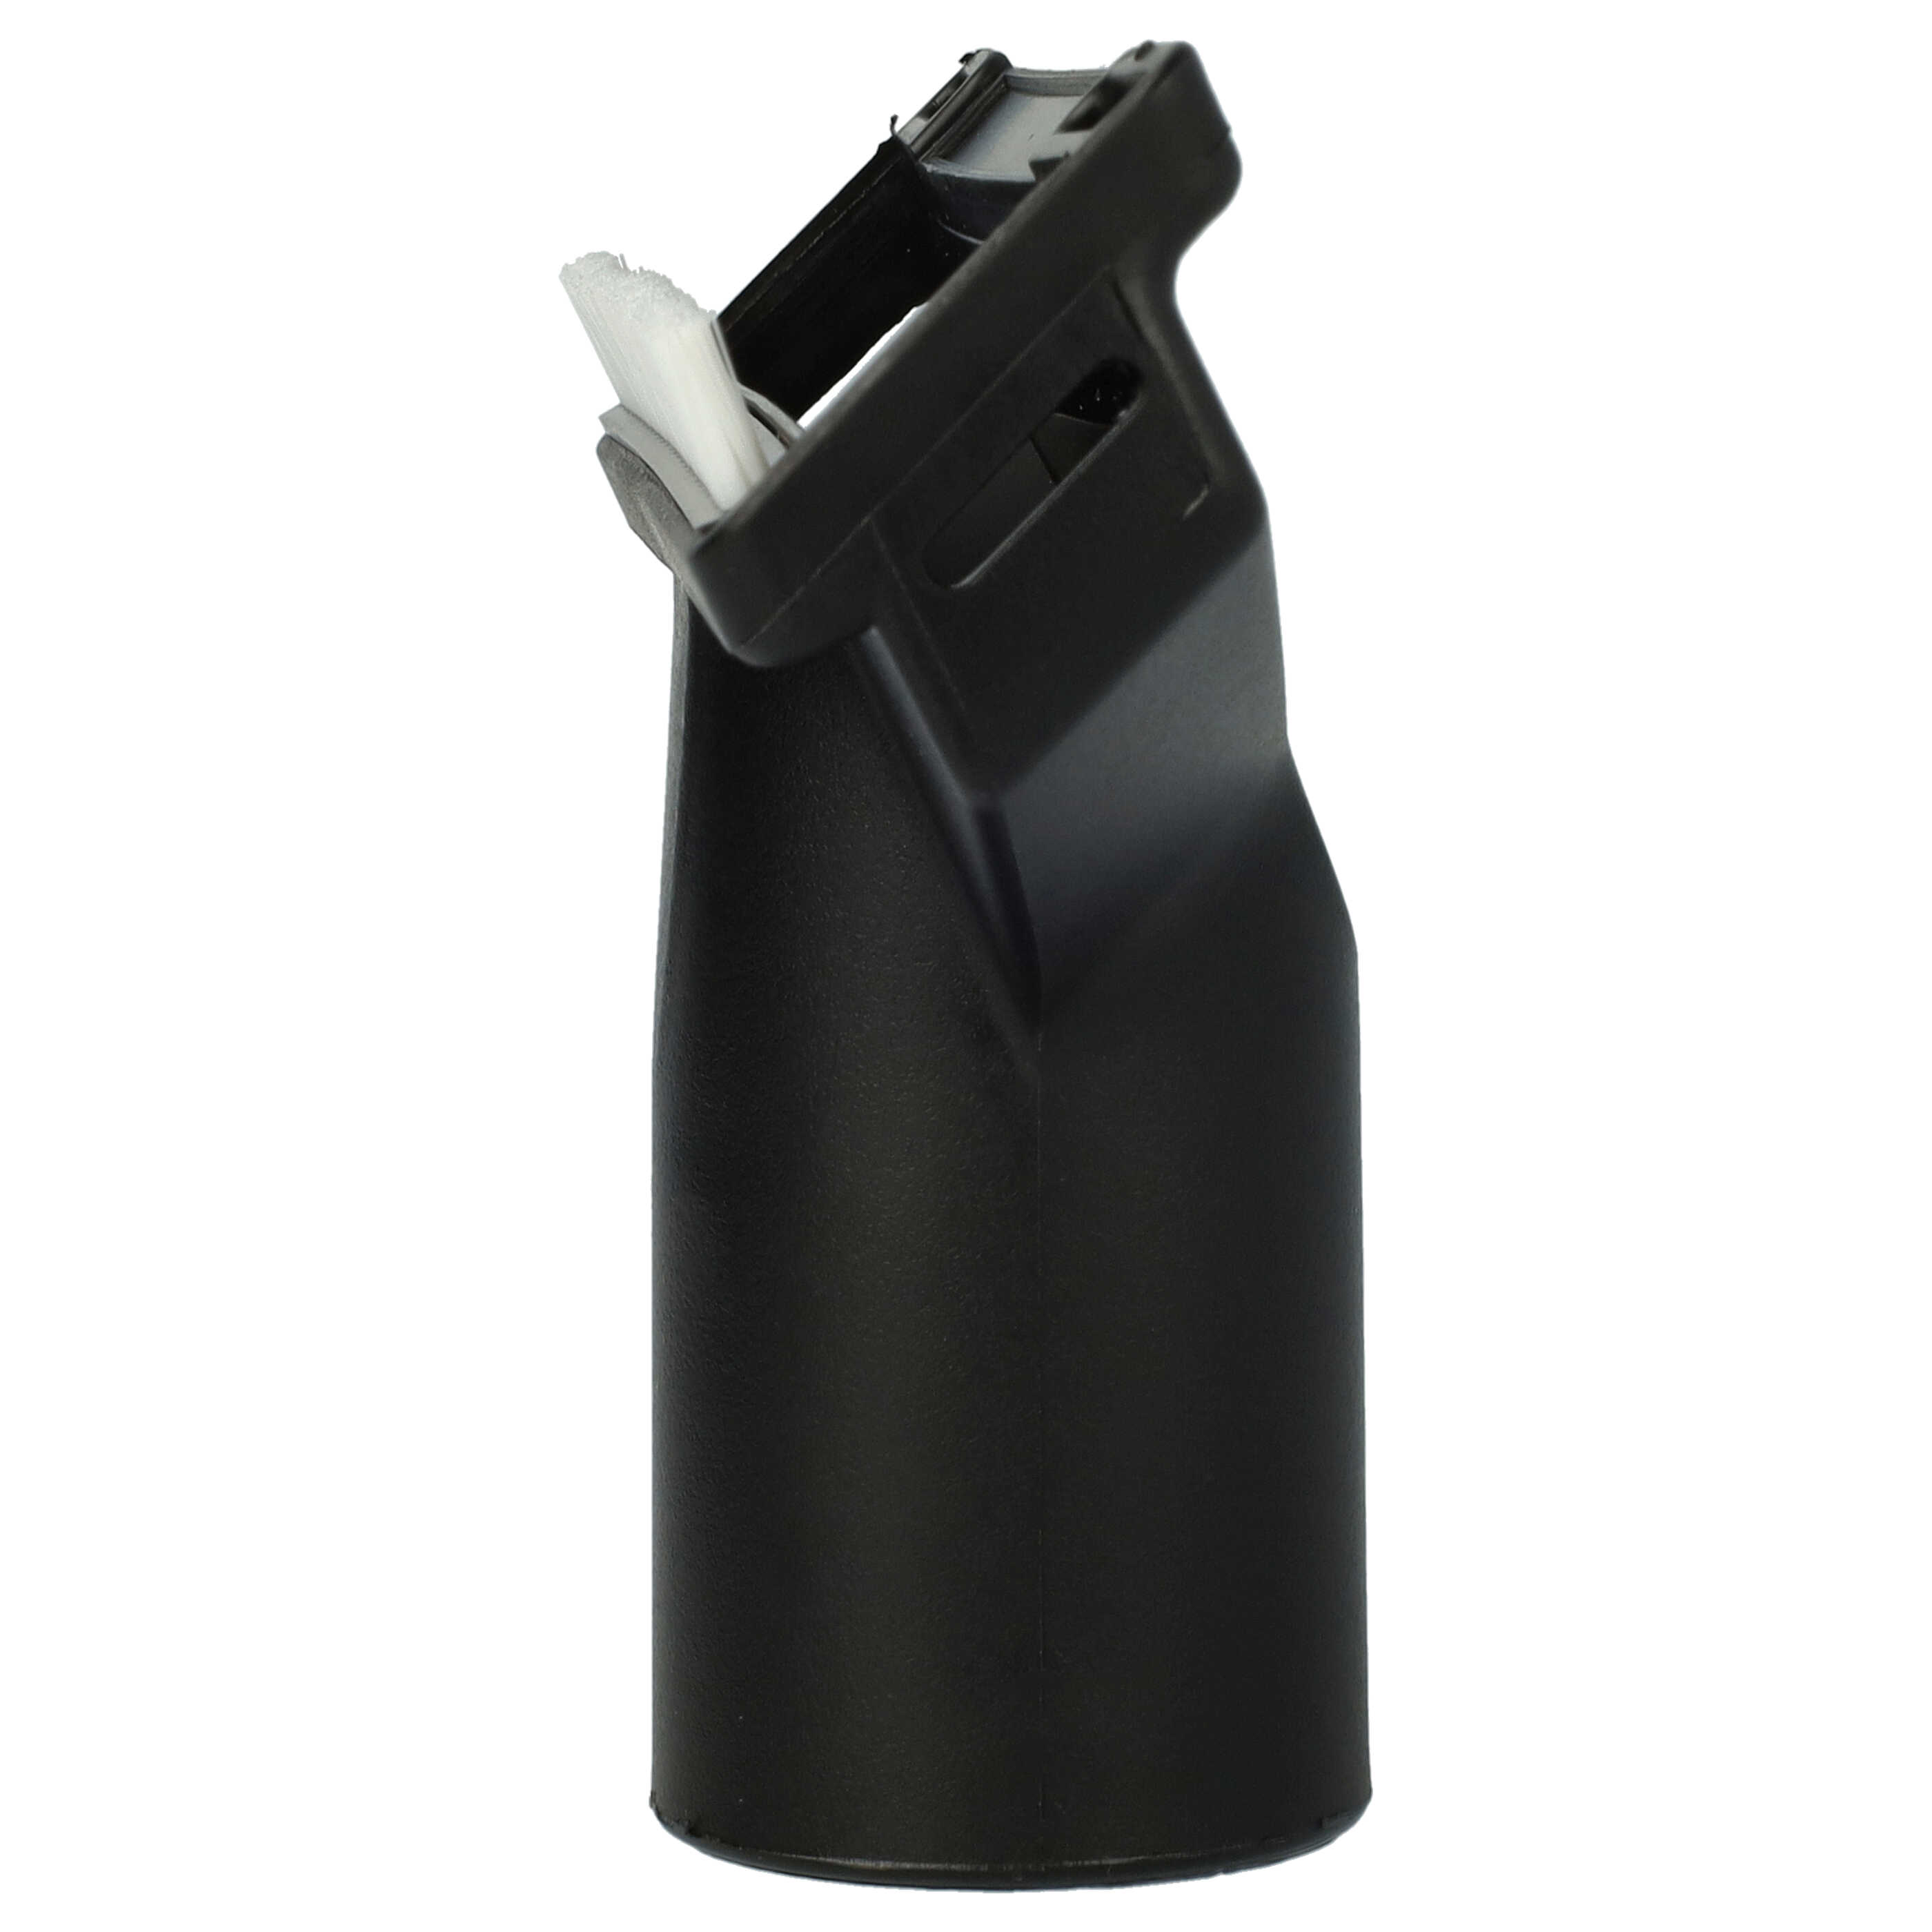 Boquilla de suelo, boquilla de barrido reemplaza cepillo Bosch 2 609 256 F25, 14 cm